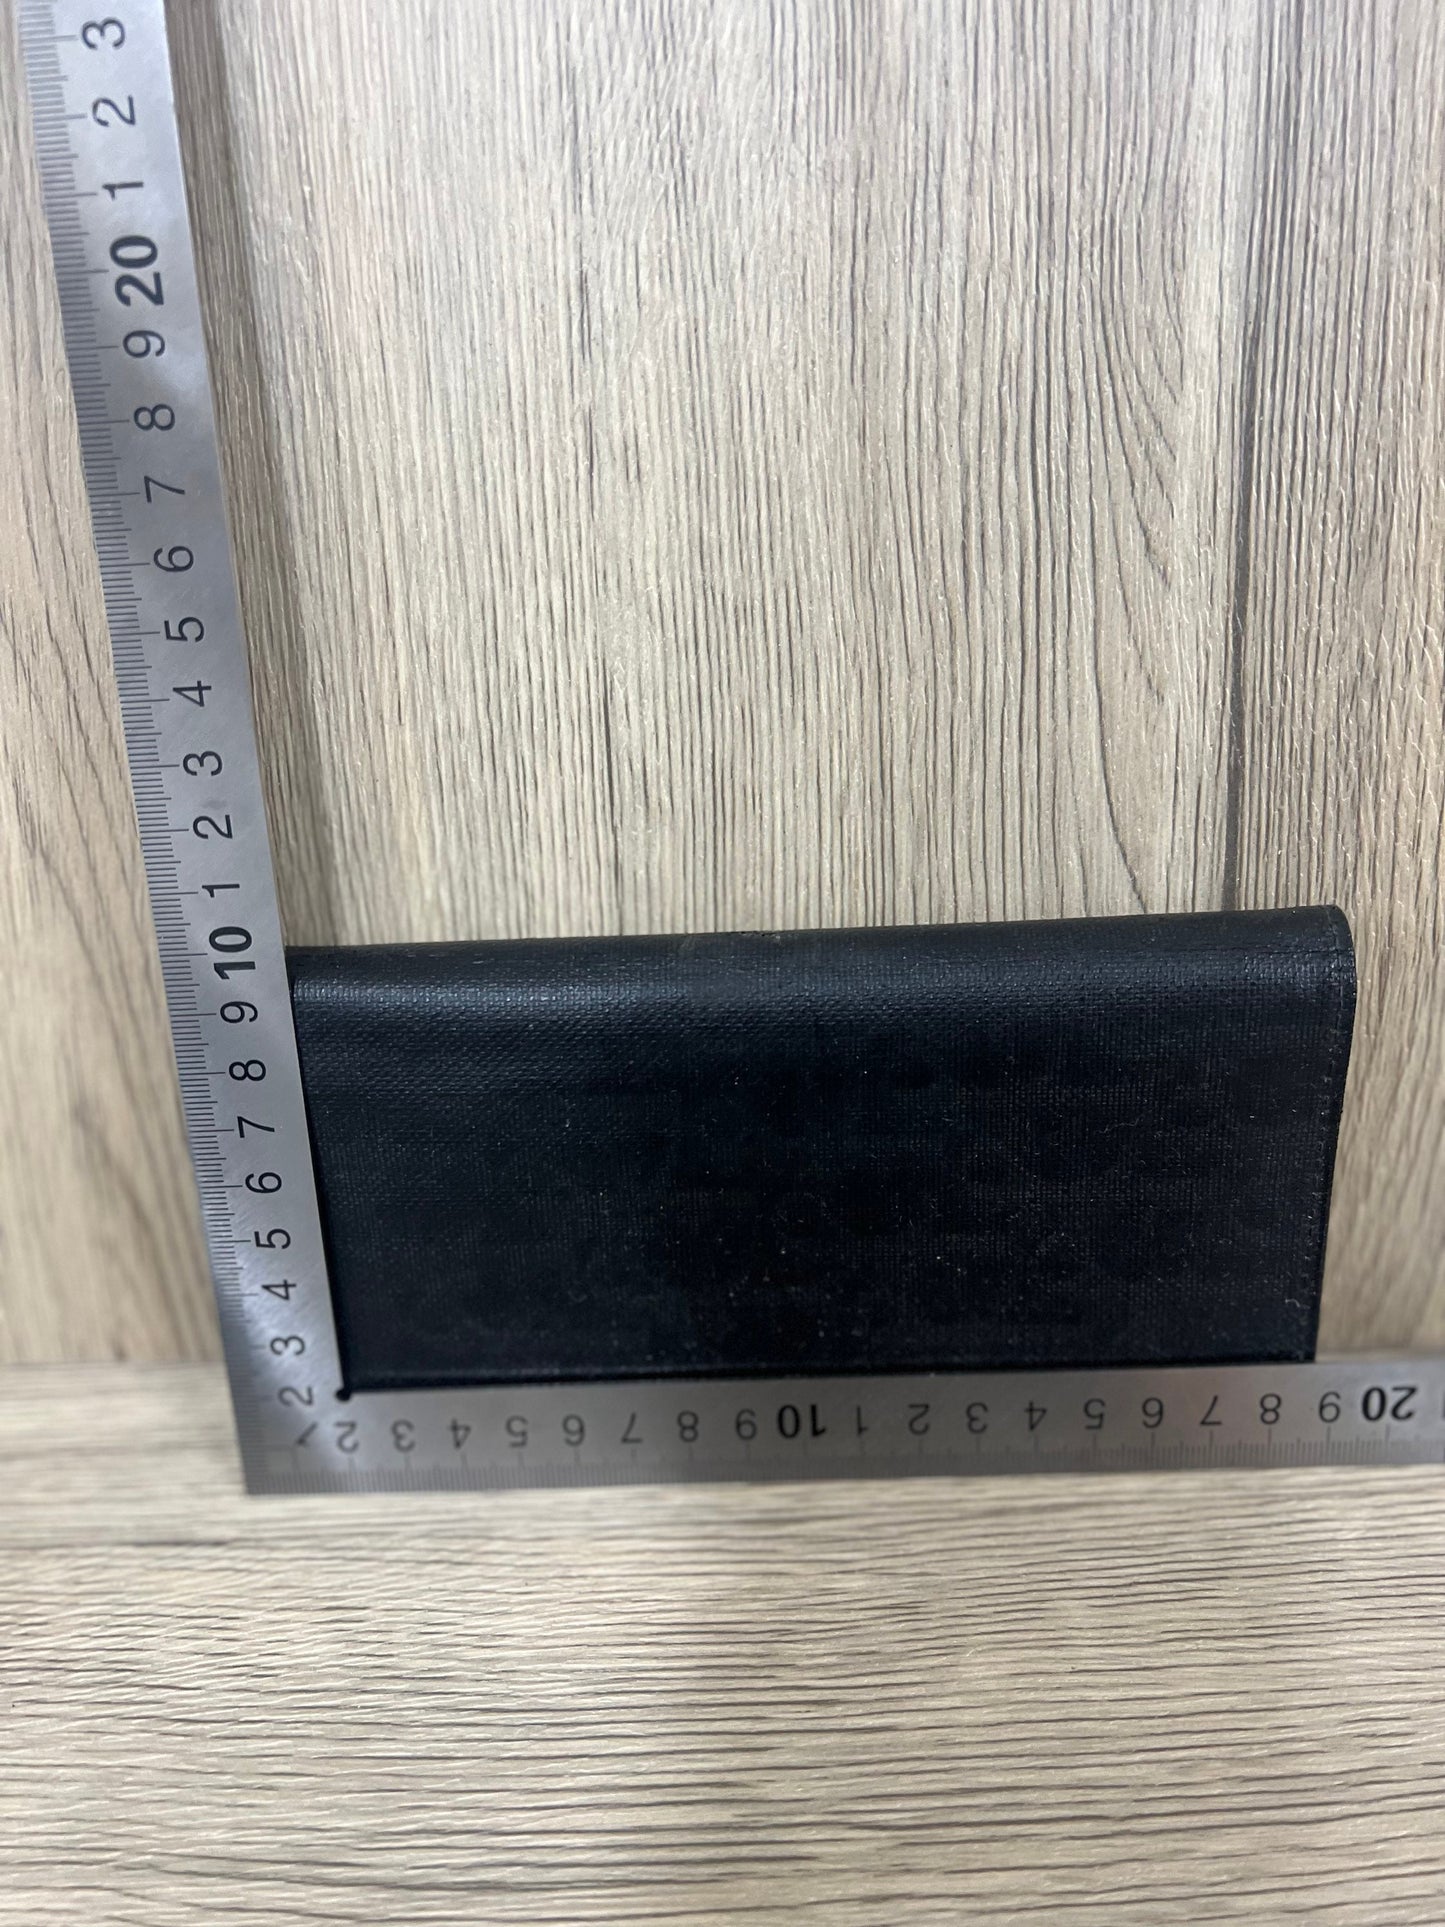 Christian Dior black long wallet w18x H10 x 18cm (BBW12 3 Jun 22)